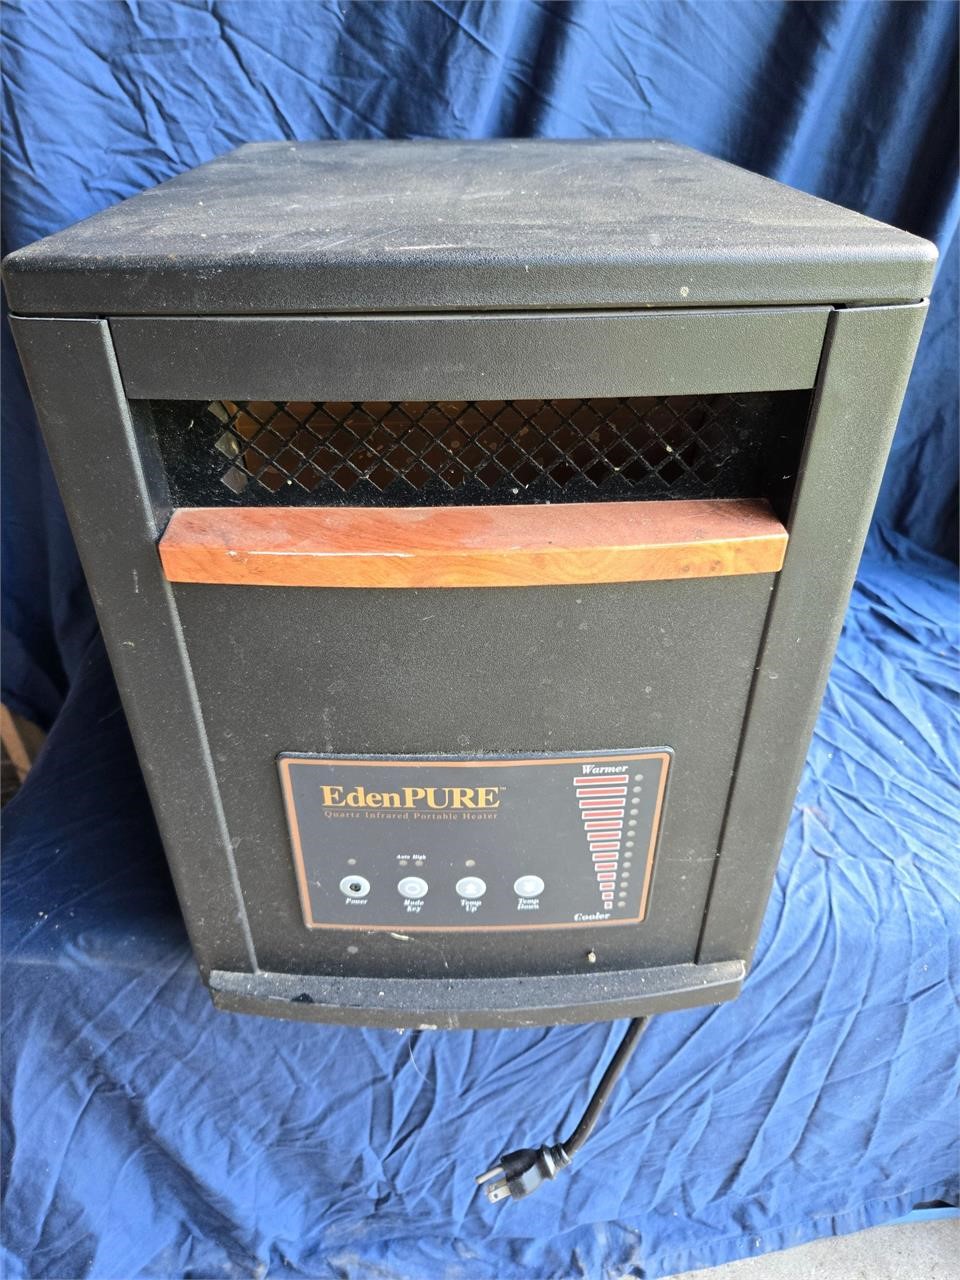 Eden Pure Portable Heater Gen 3 Model A3705